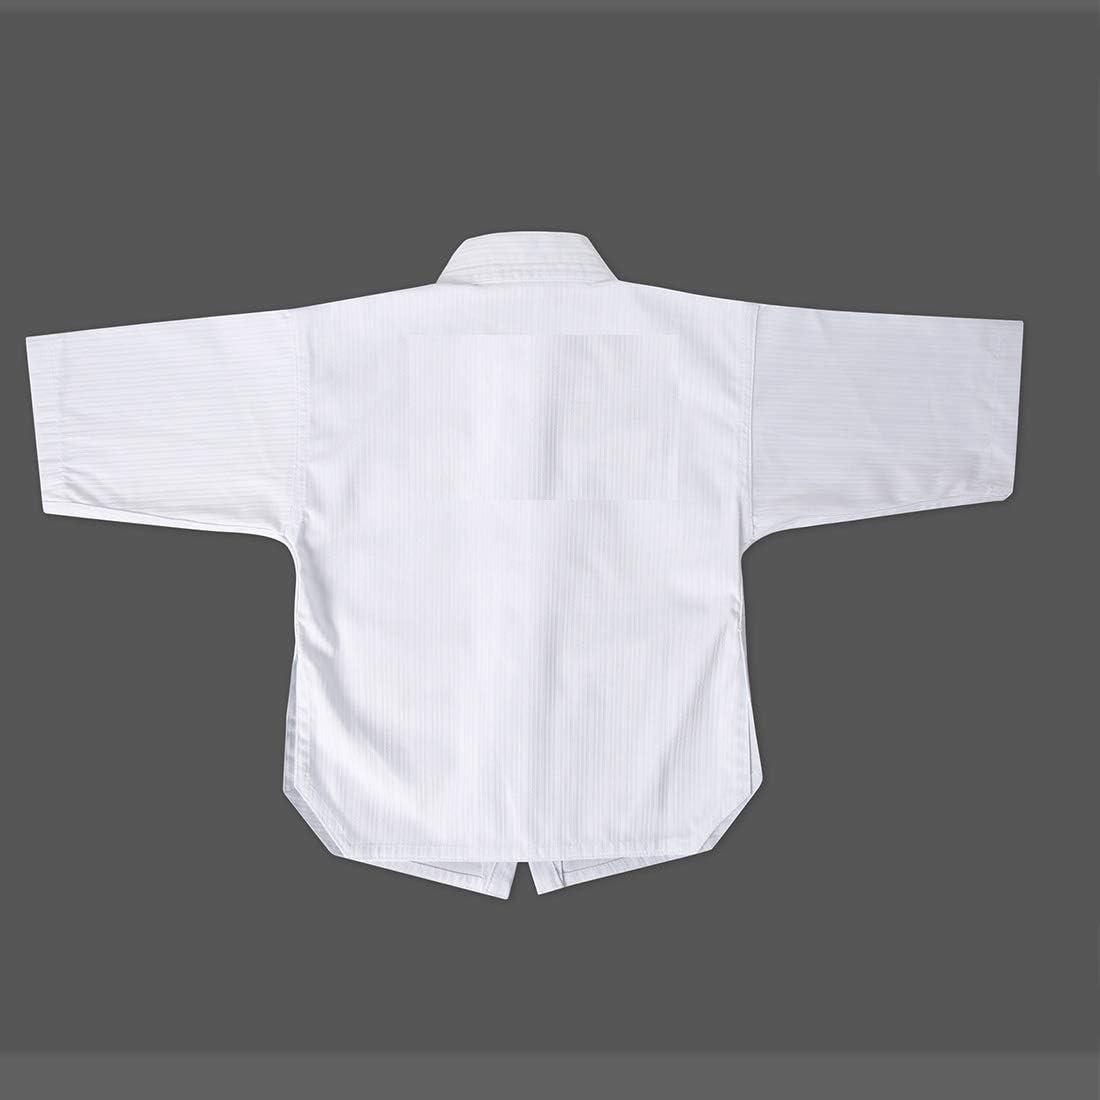 Baby Taekwondo Dobok - NIHTBABY